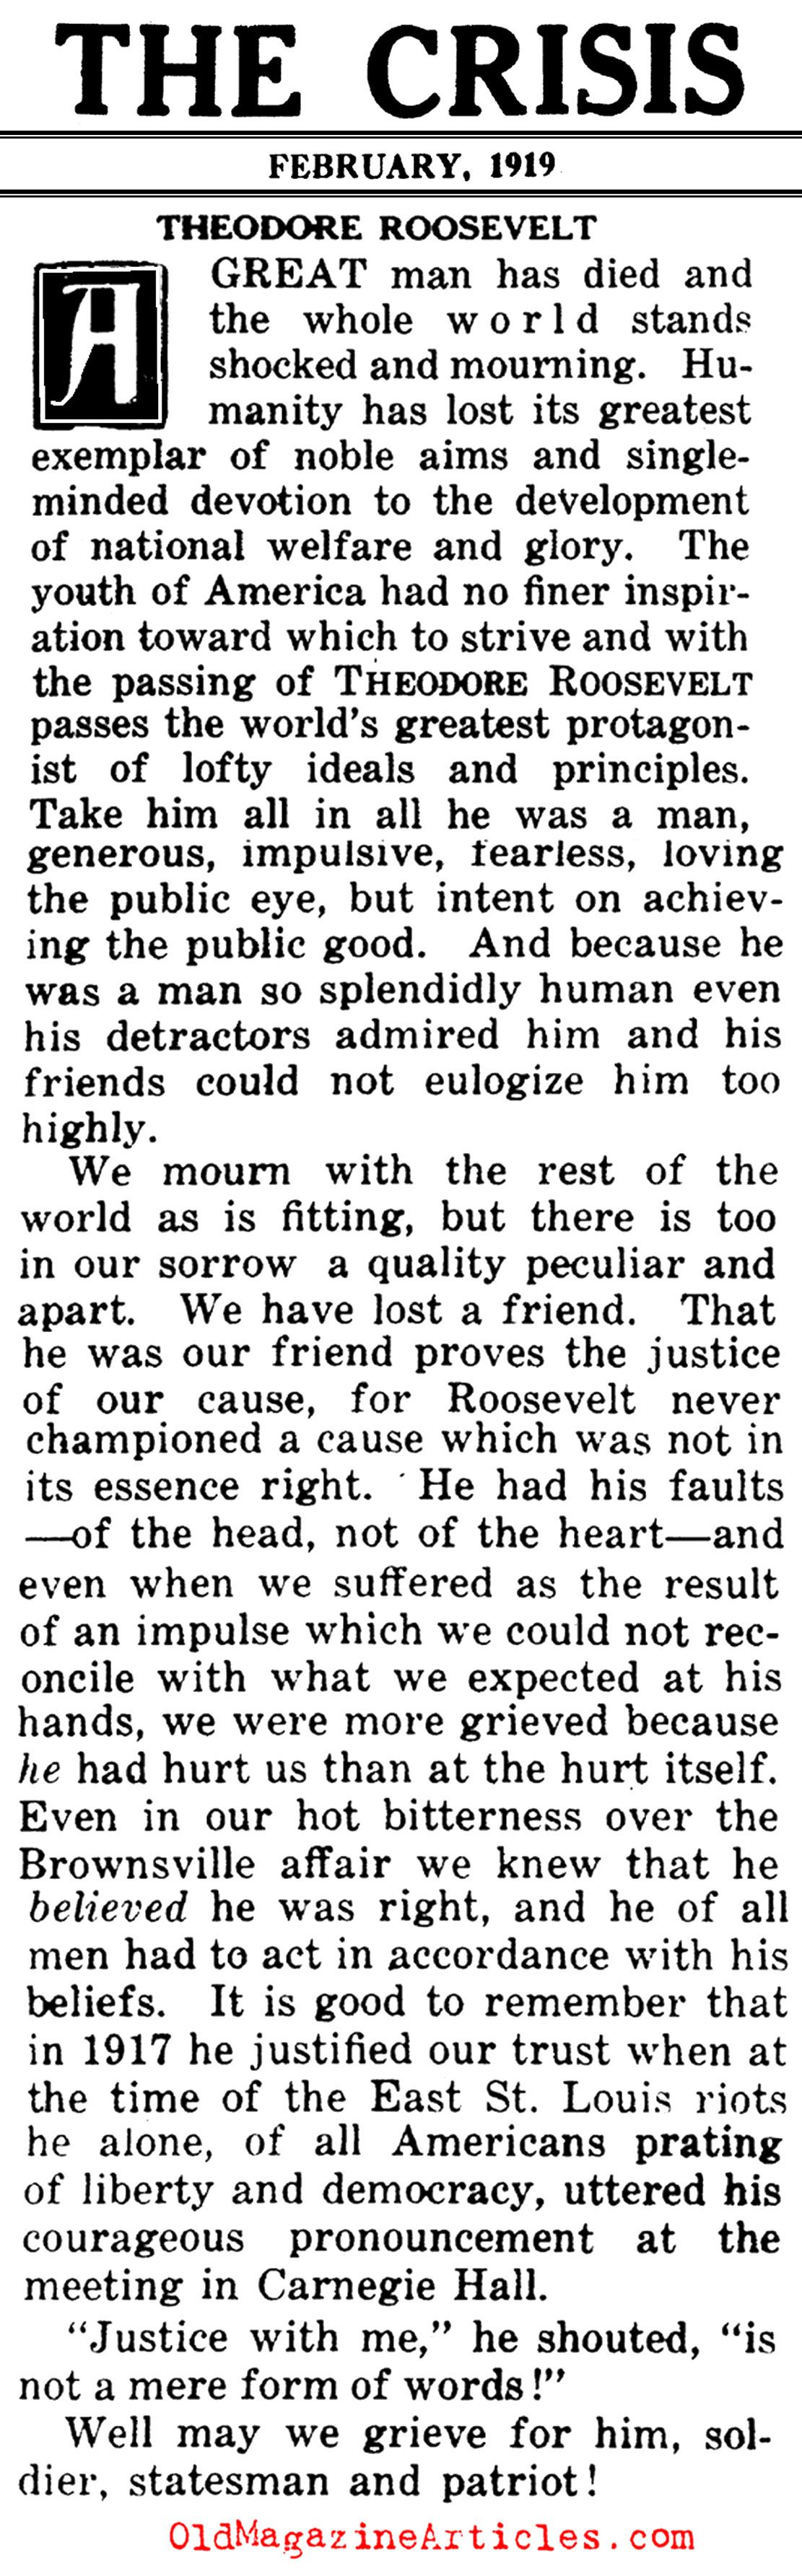 Teddy Roosevelt, R.I.P.  (The Crises, 1919)